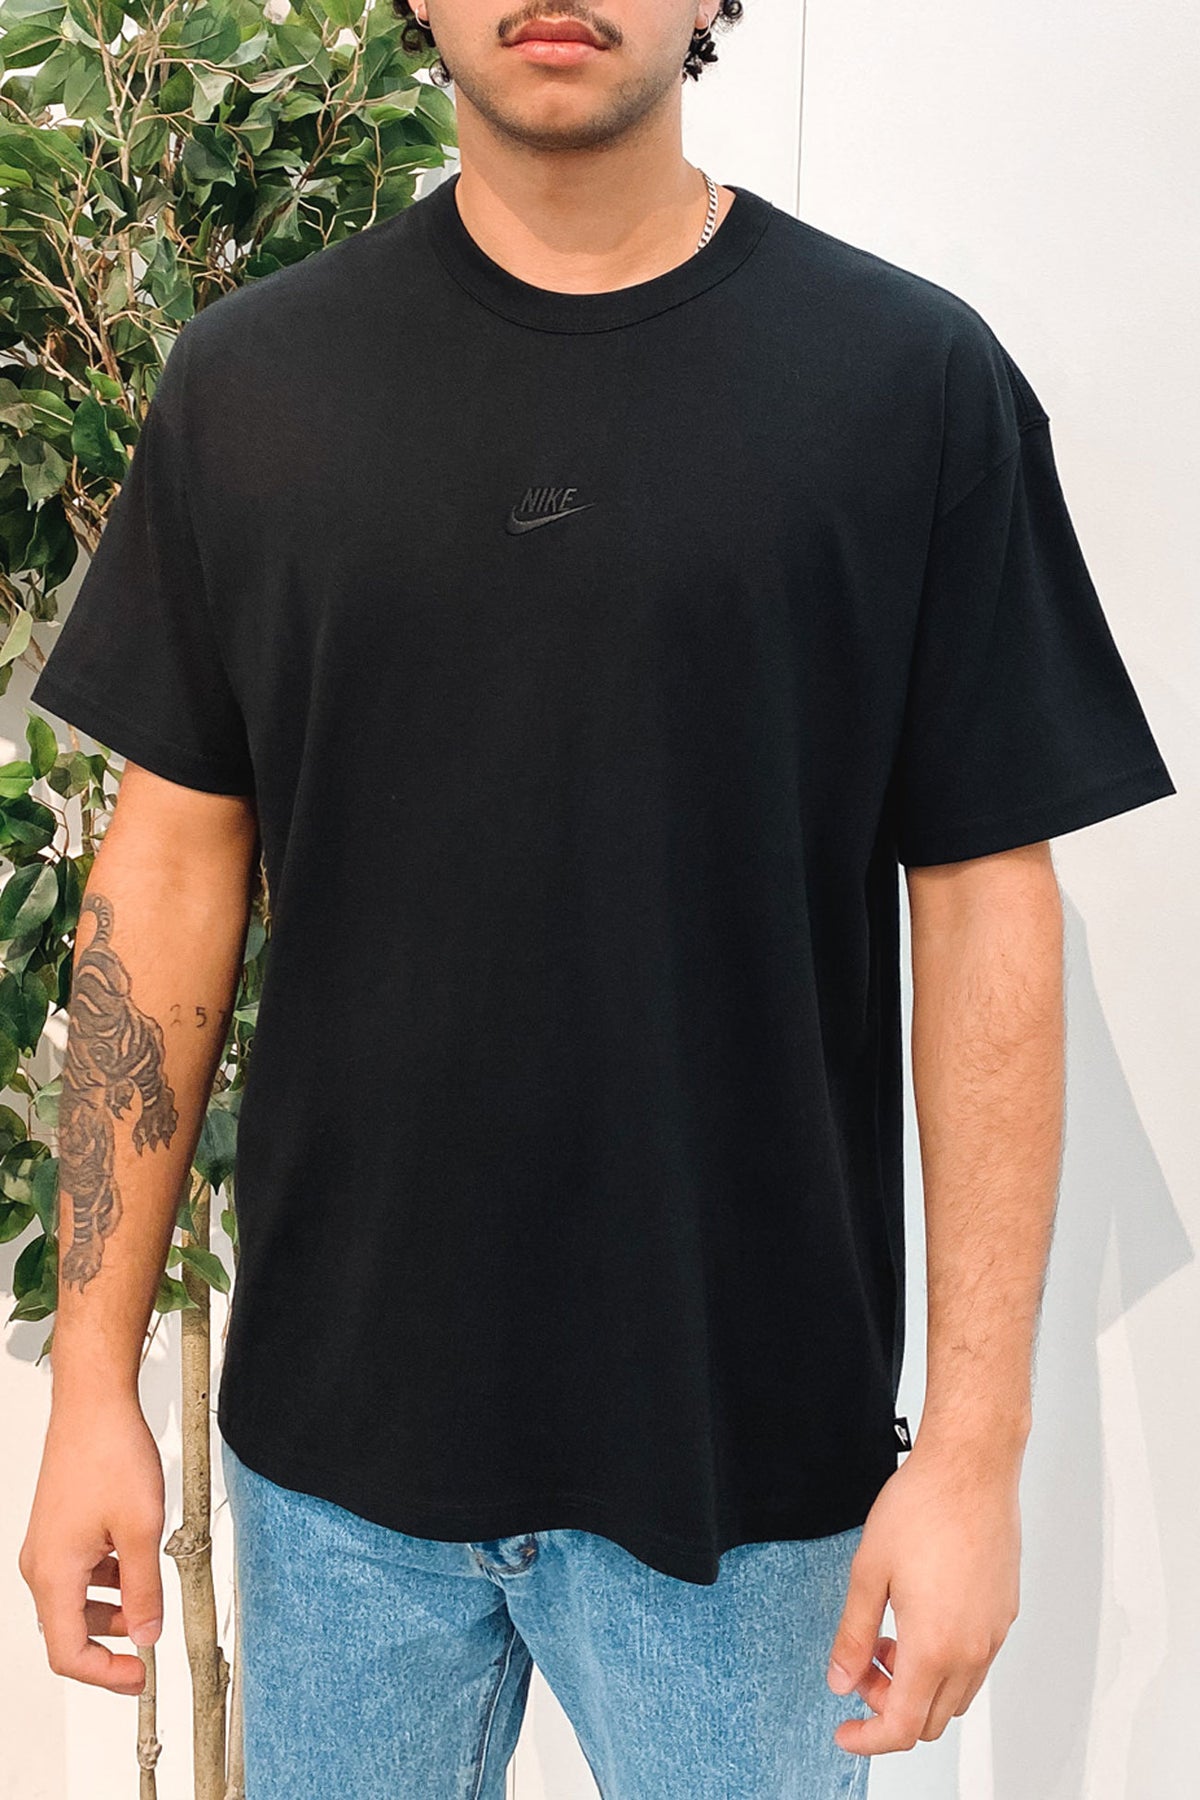 cruzar Bienes enseñar Nike Sportswear Premium Essentials Tee Black - Jean Jail